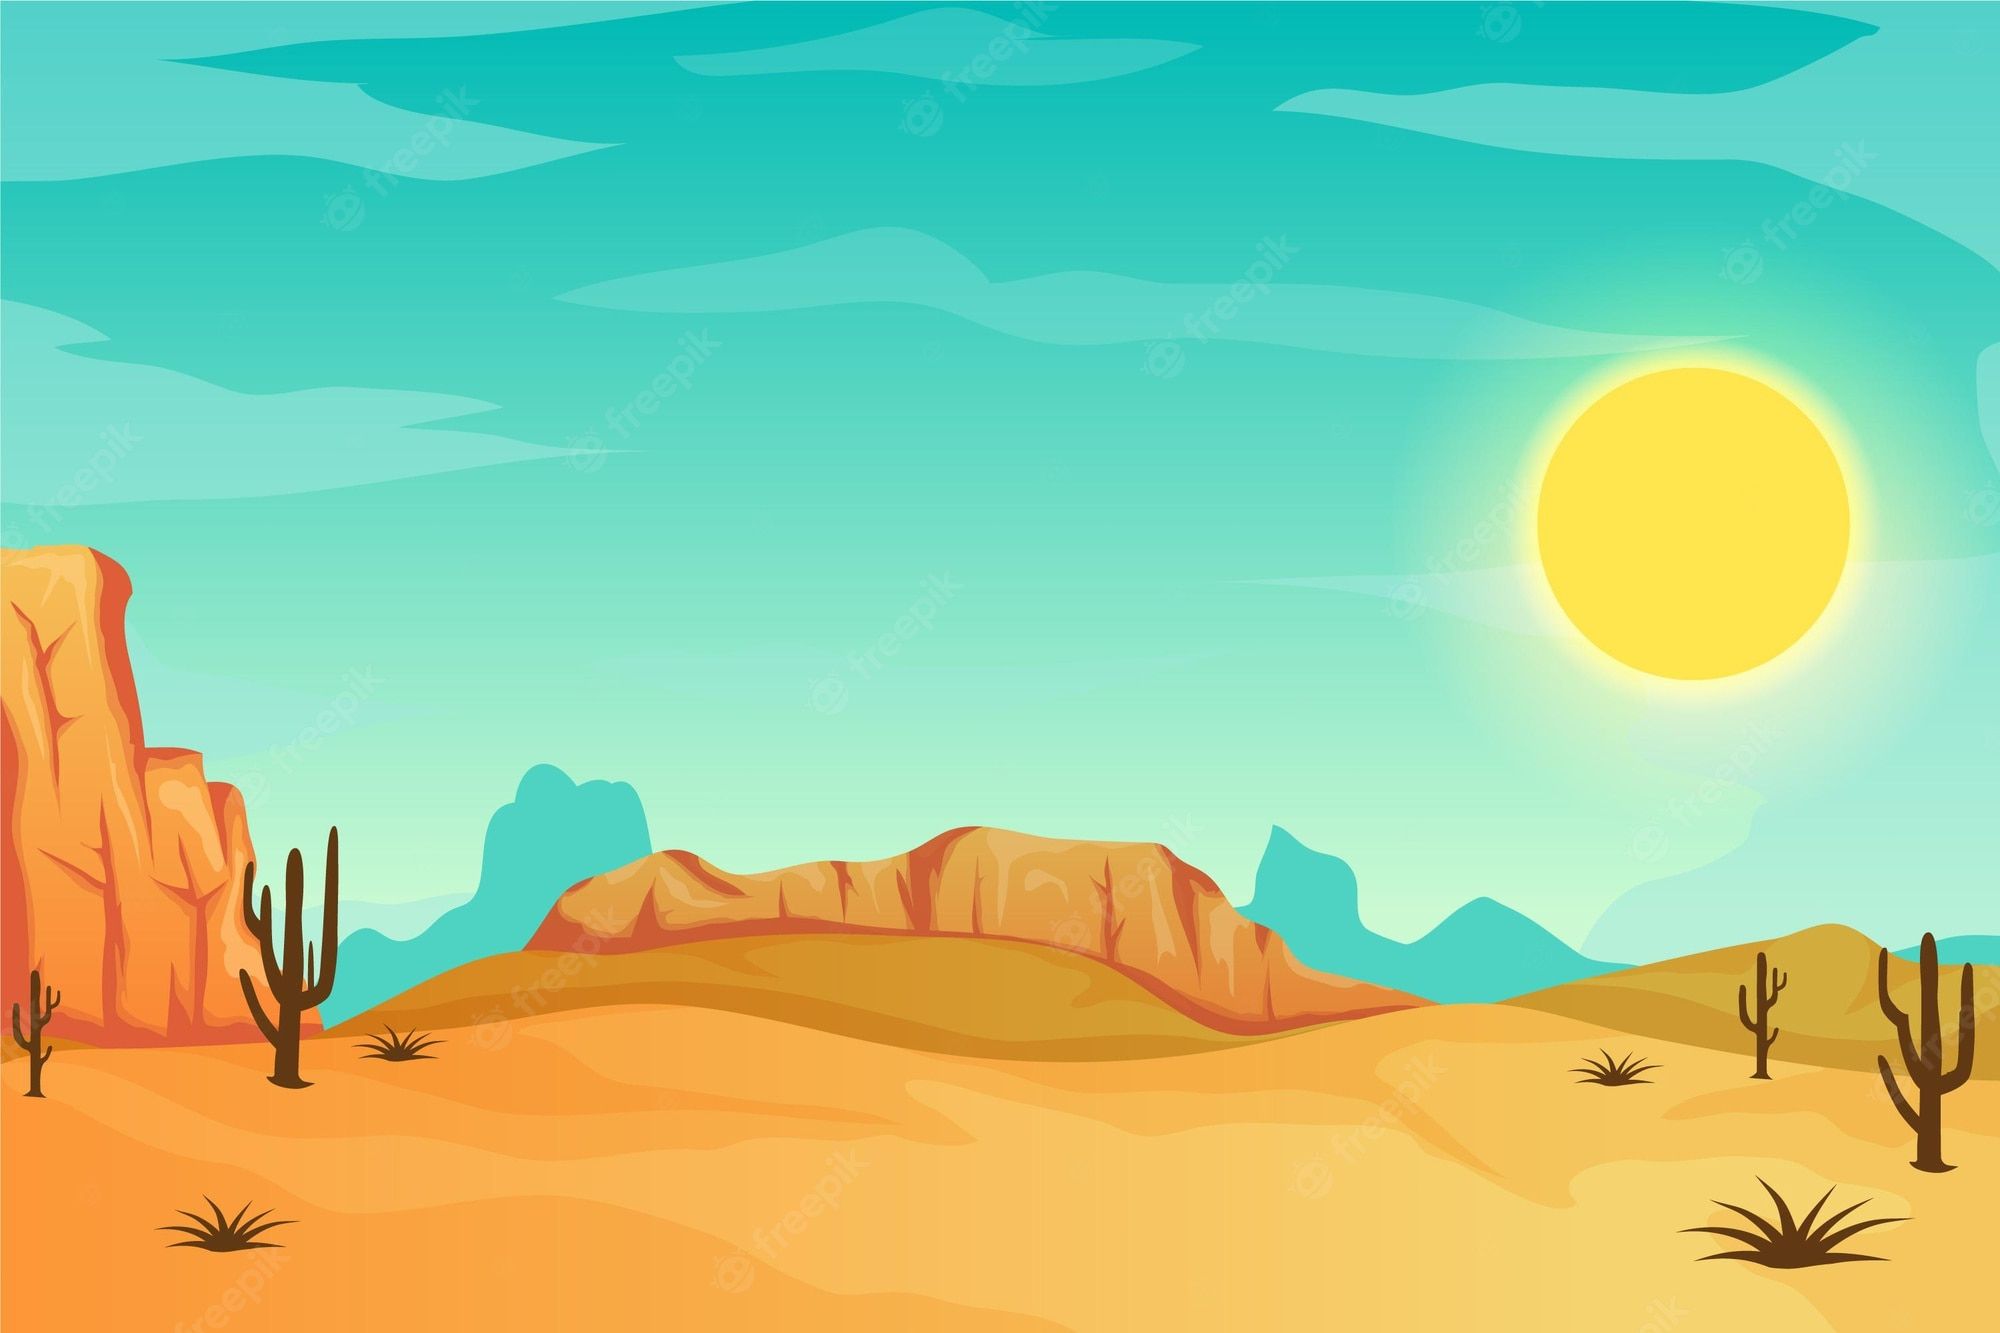 A desert landscape with a big sun in the sky - Desert